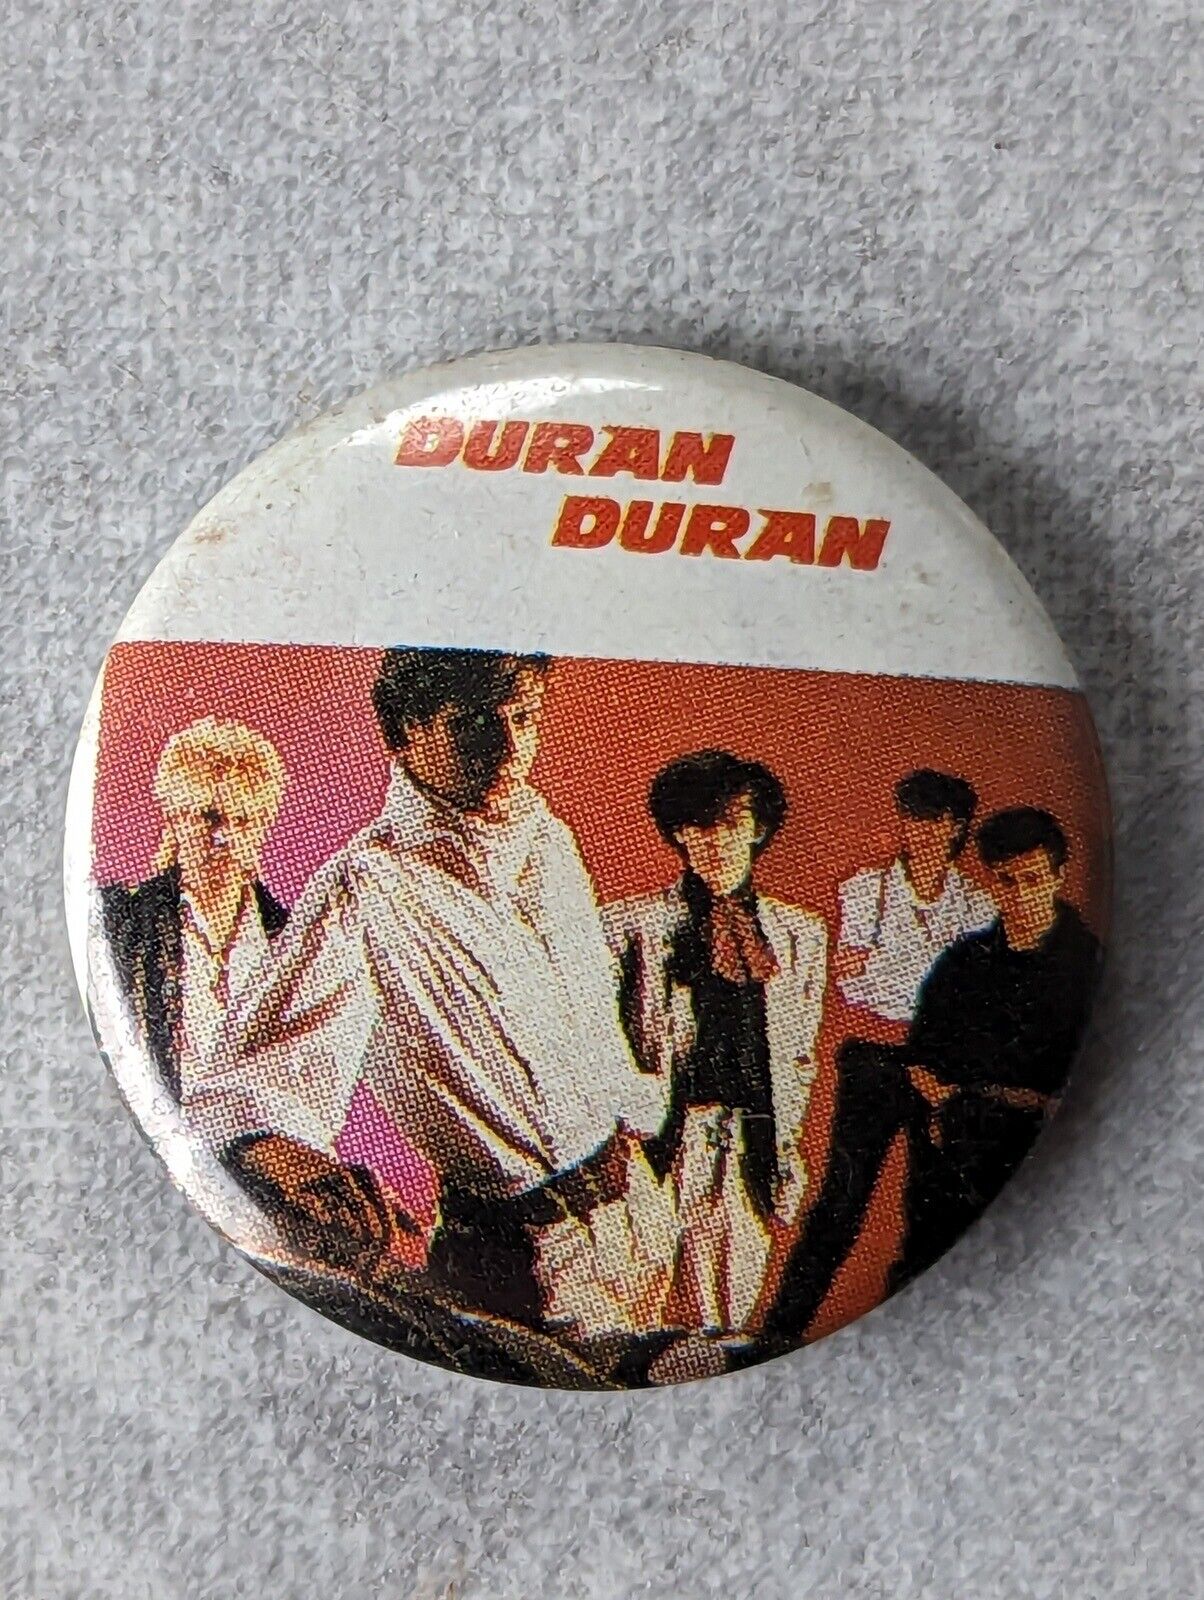 Vintage 80s Duran Duran Pin Badge Purchased Around 1986